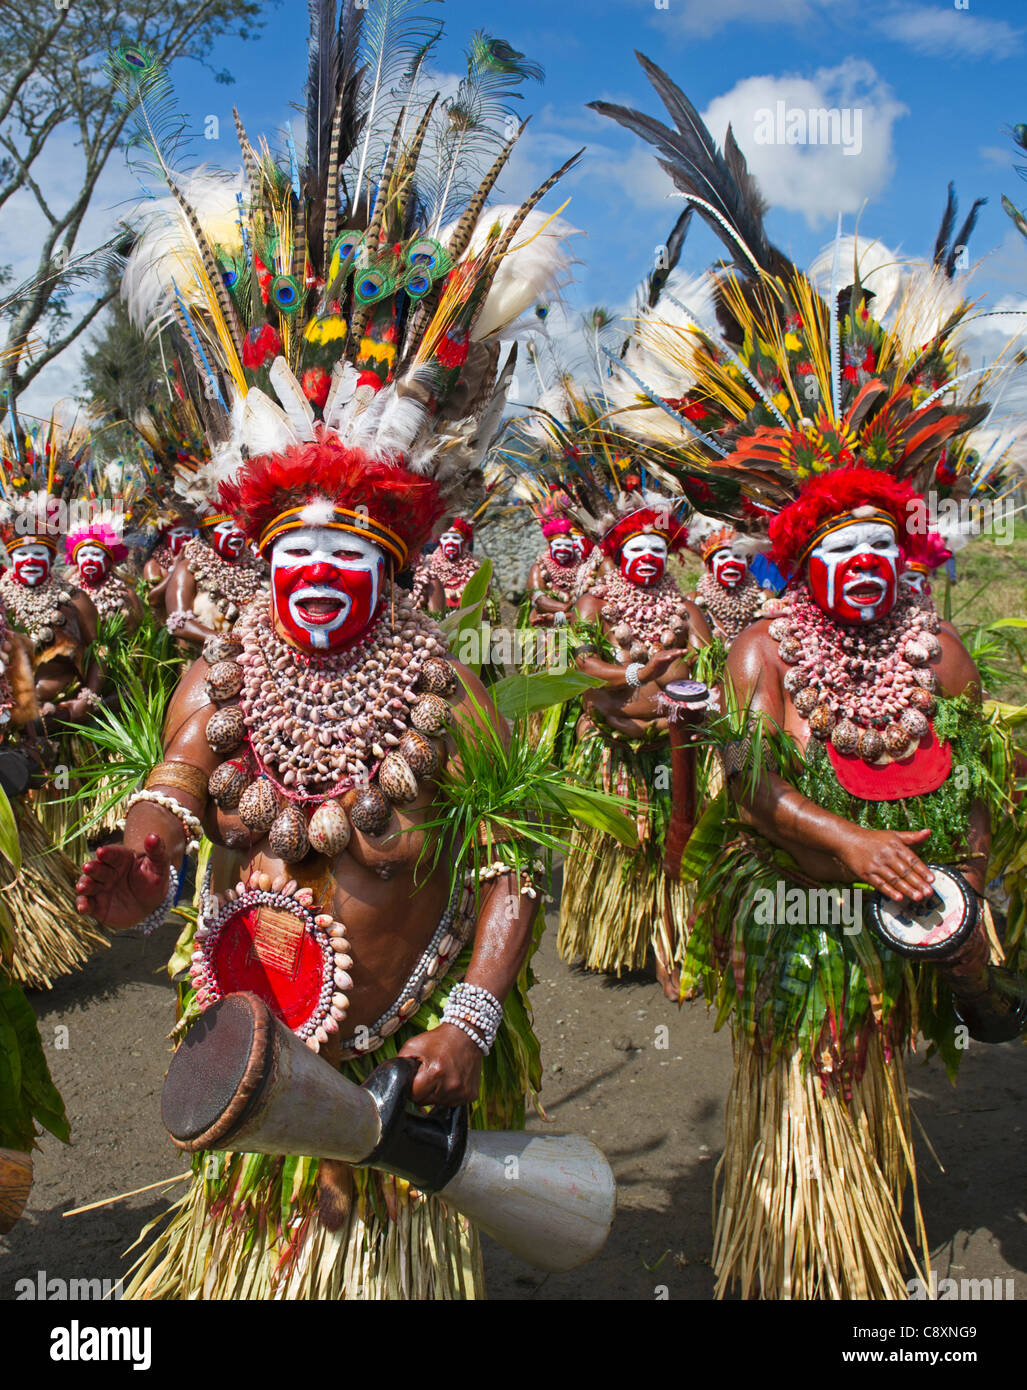 Kunai women performing at Mt Hagen Show Papua New Gunea Stock Photo